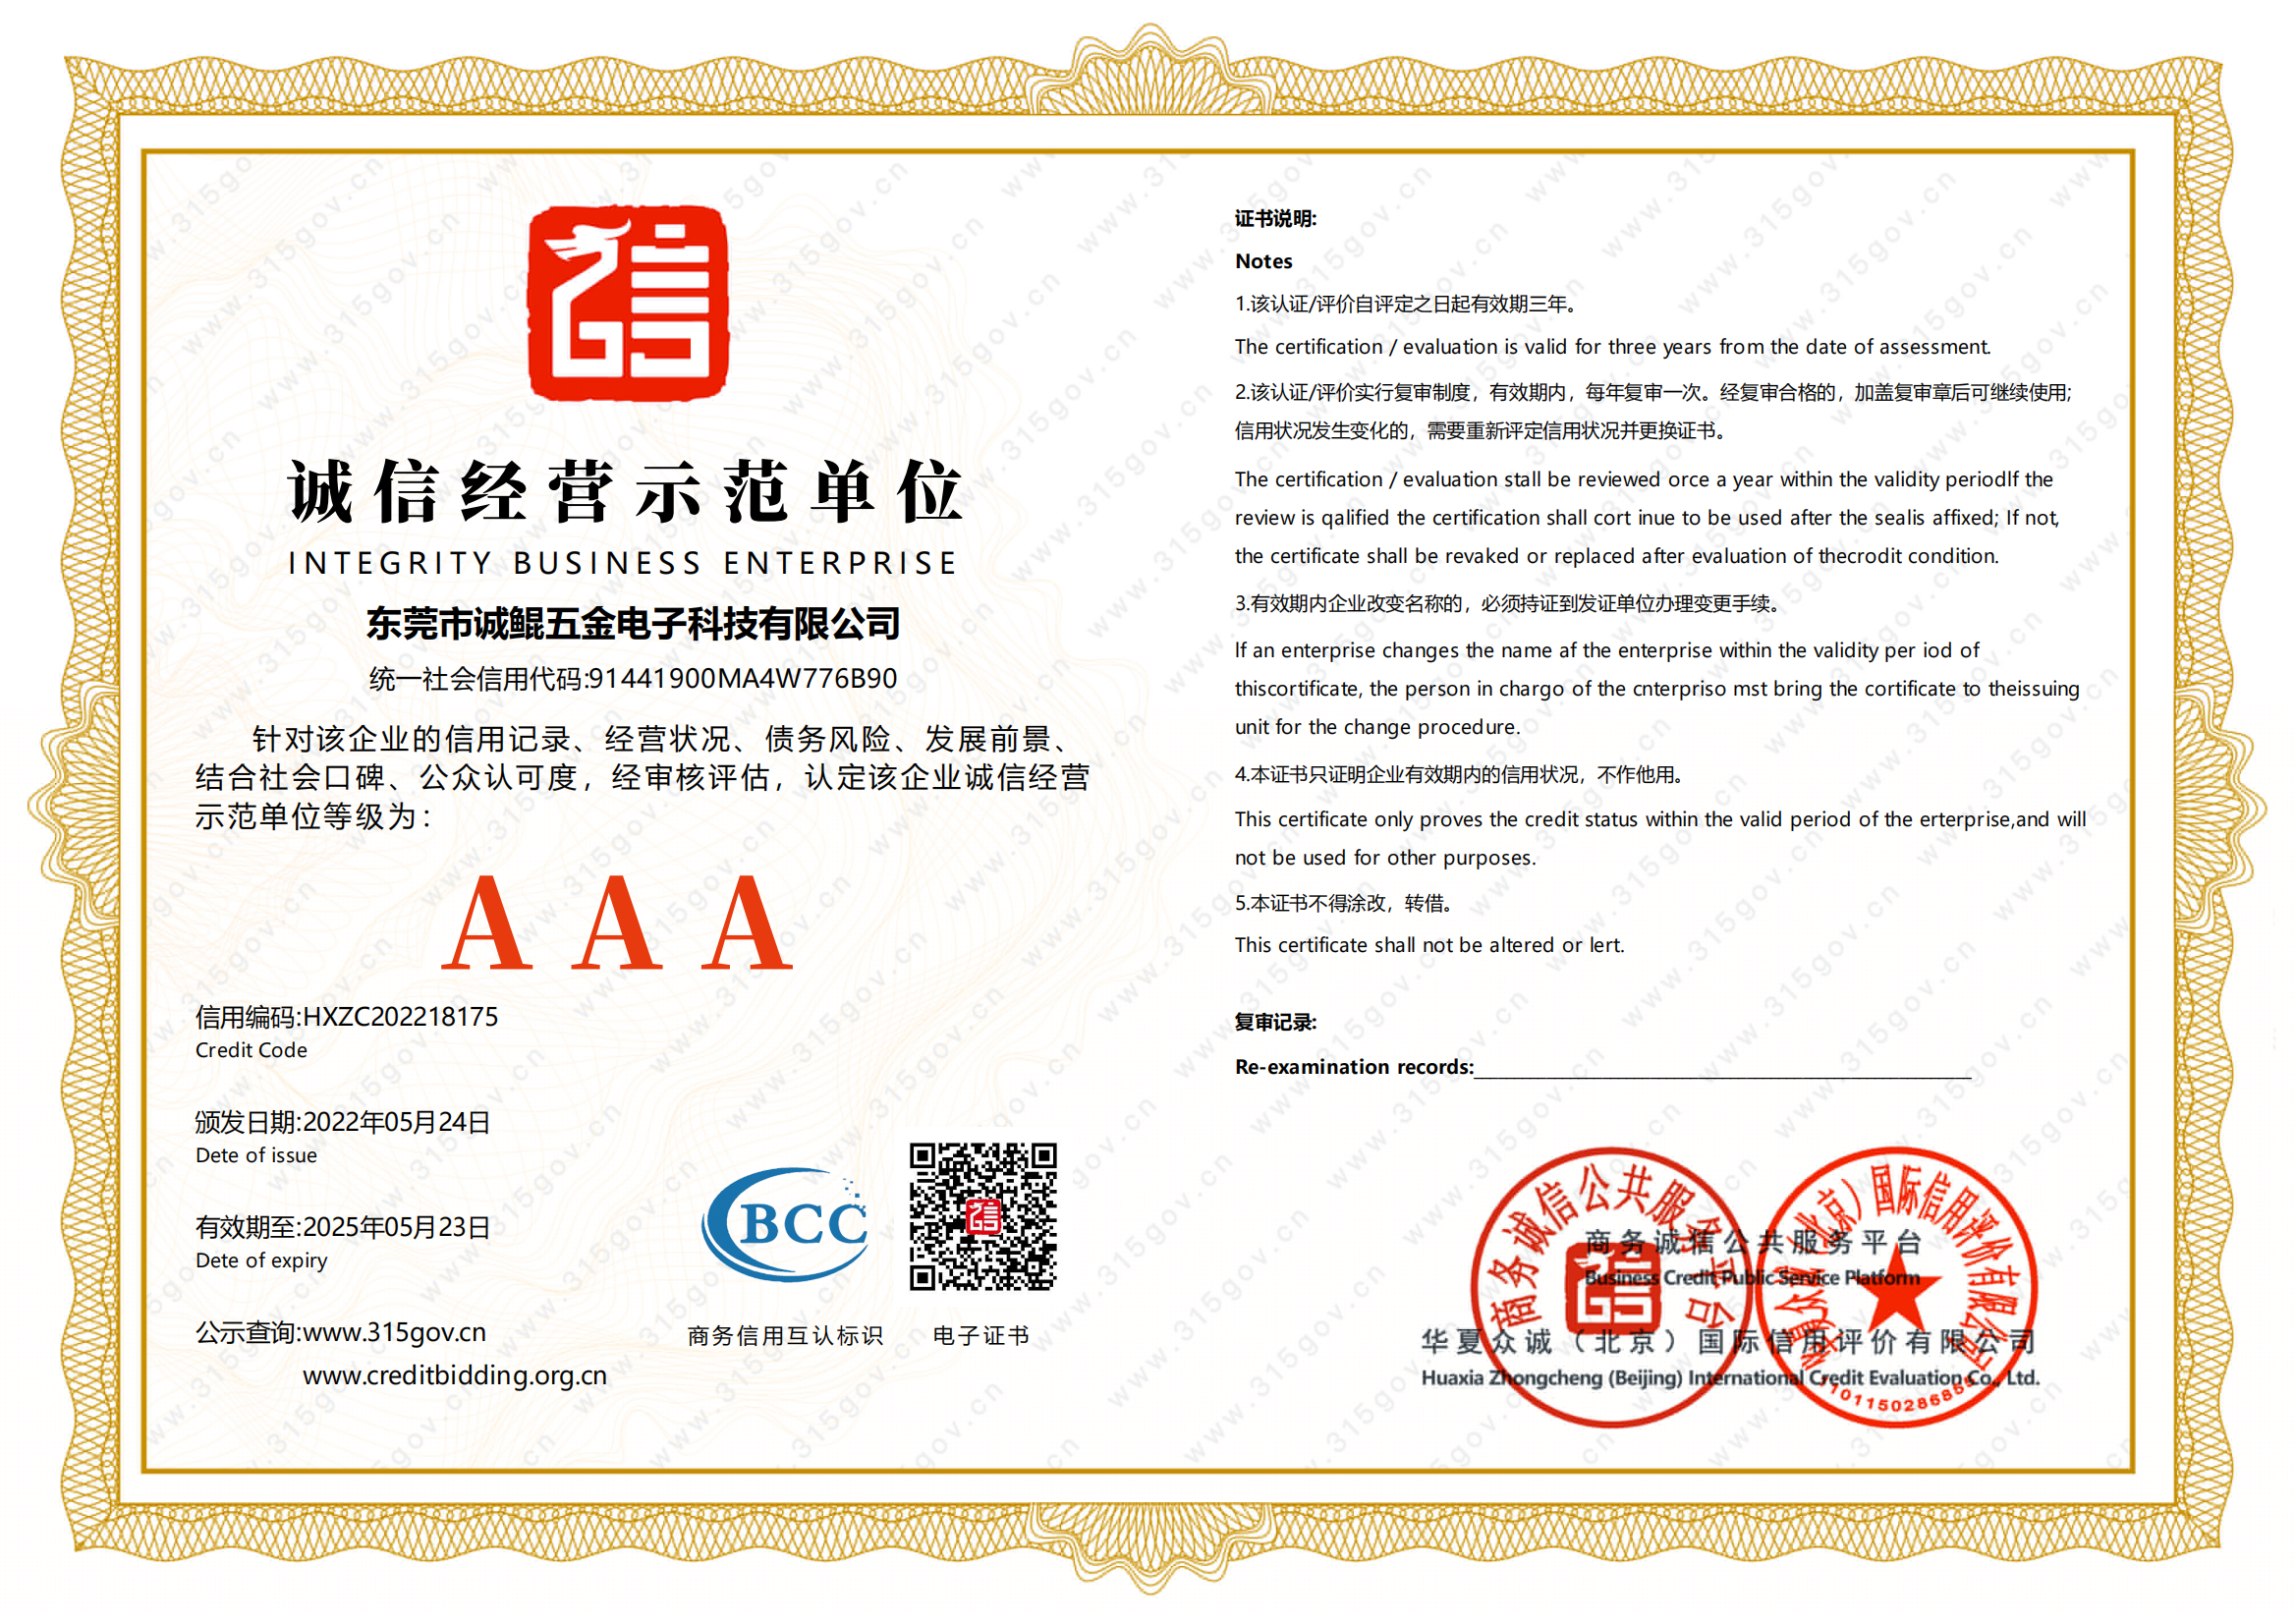 Integrity business enterprise certificate